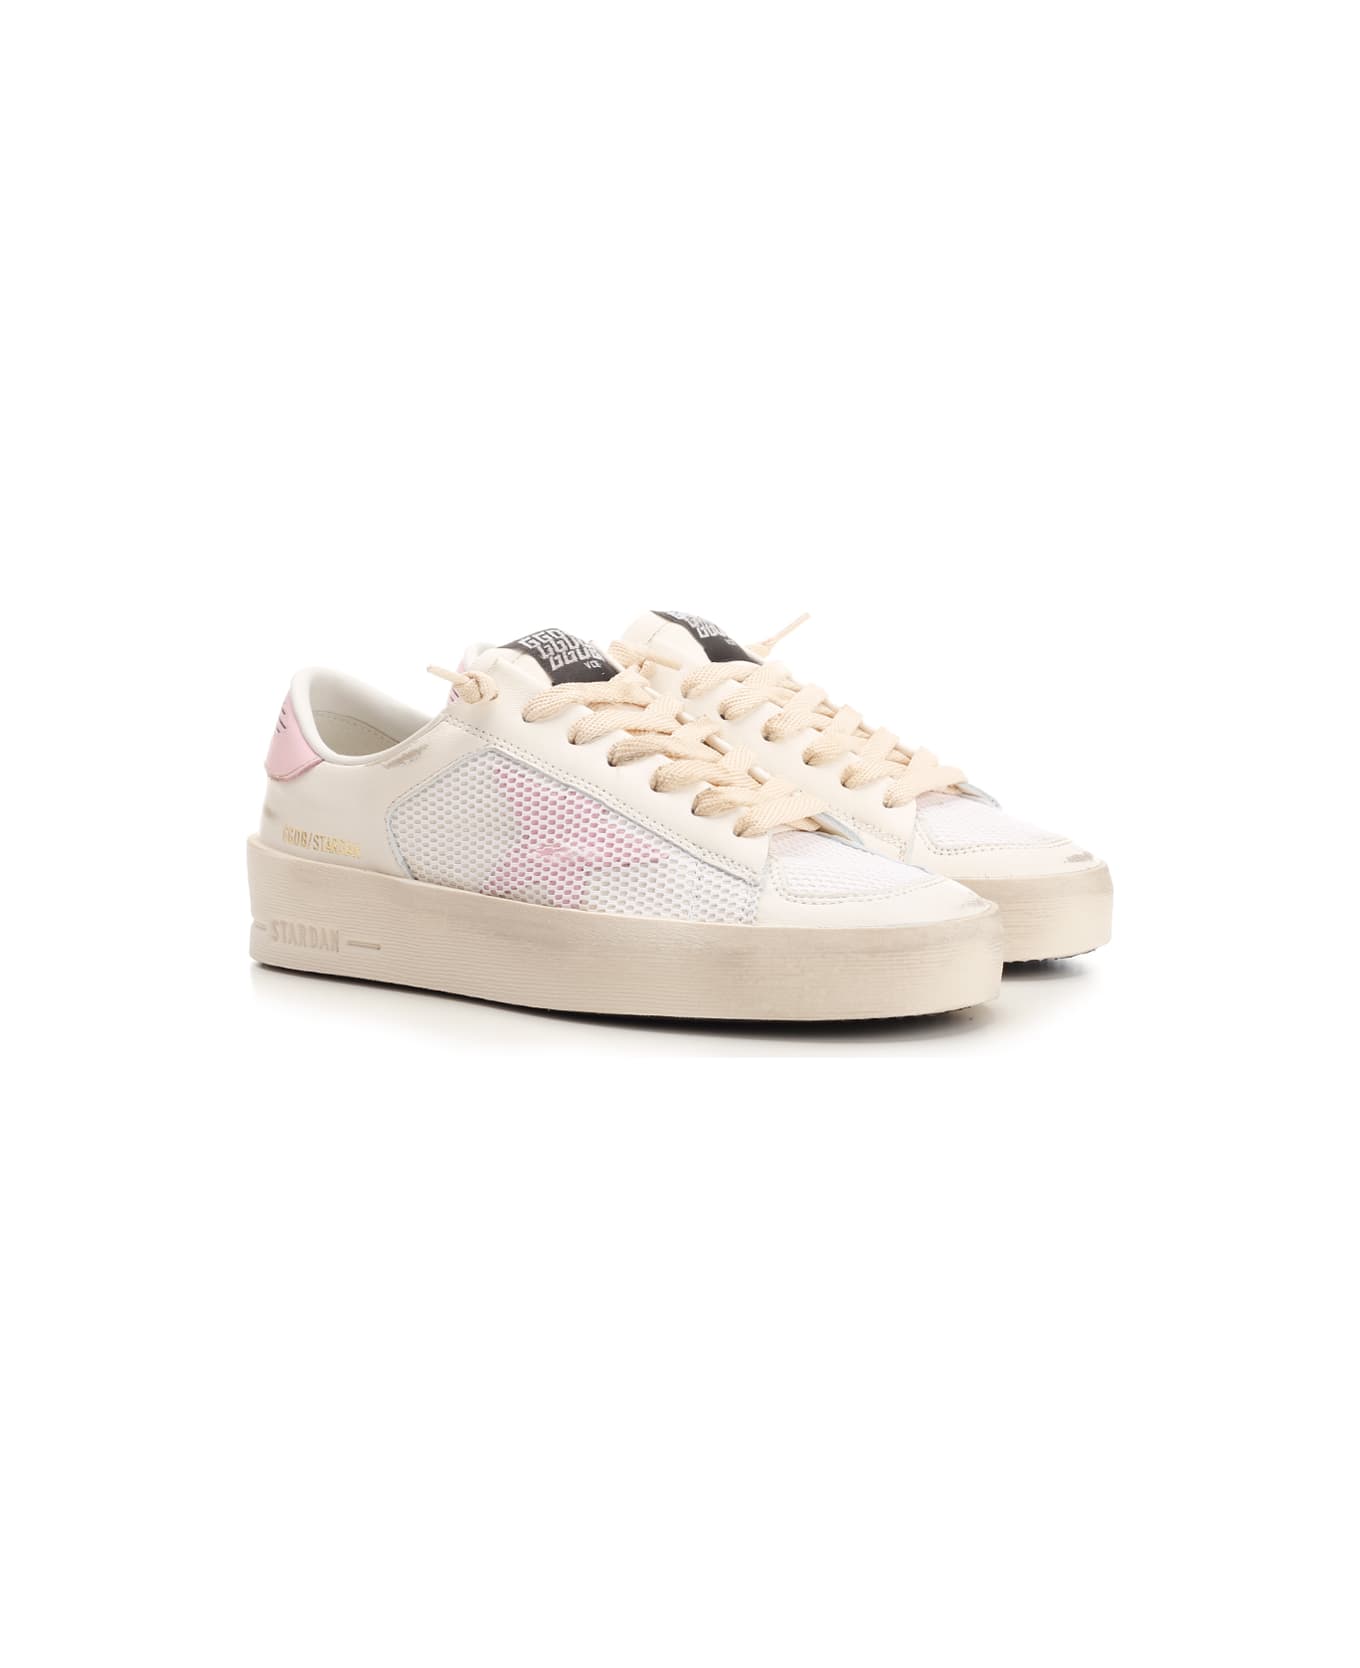 Golden Goose Stardan Mesh Sneakers - White/Orchid Pink